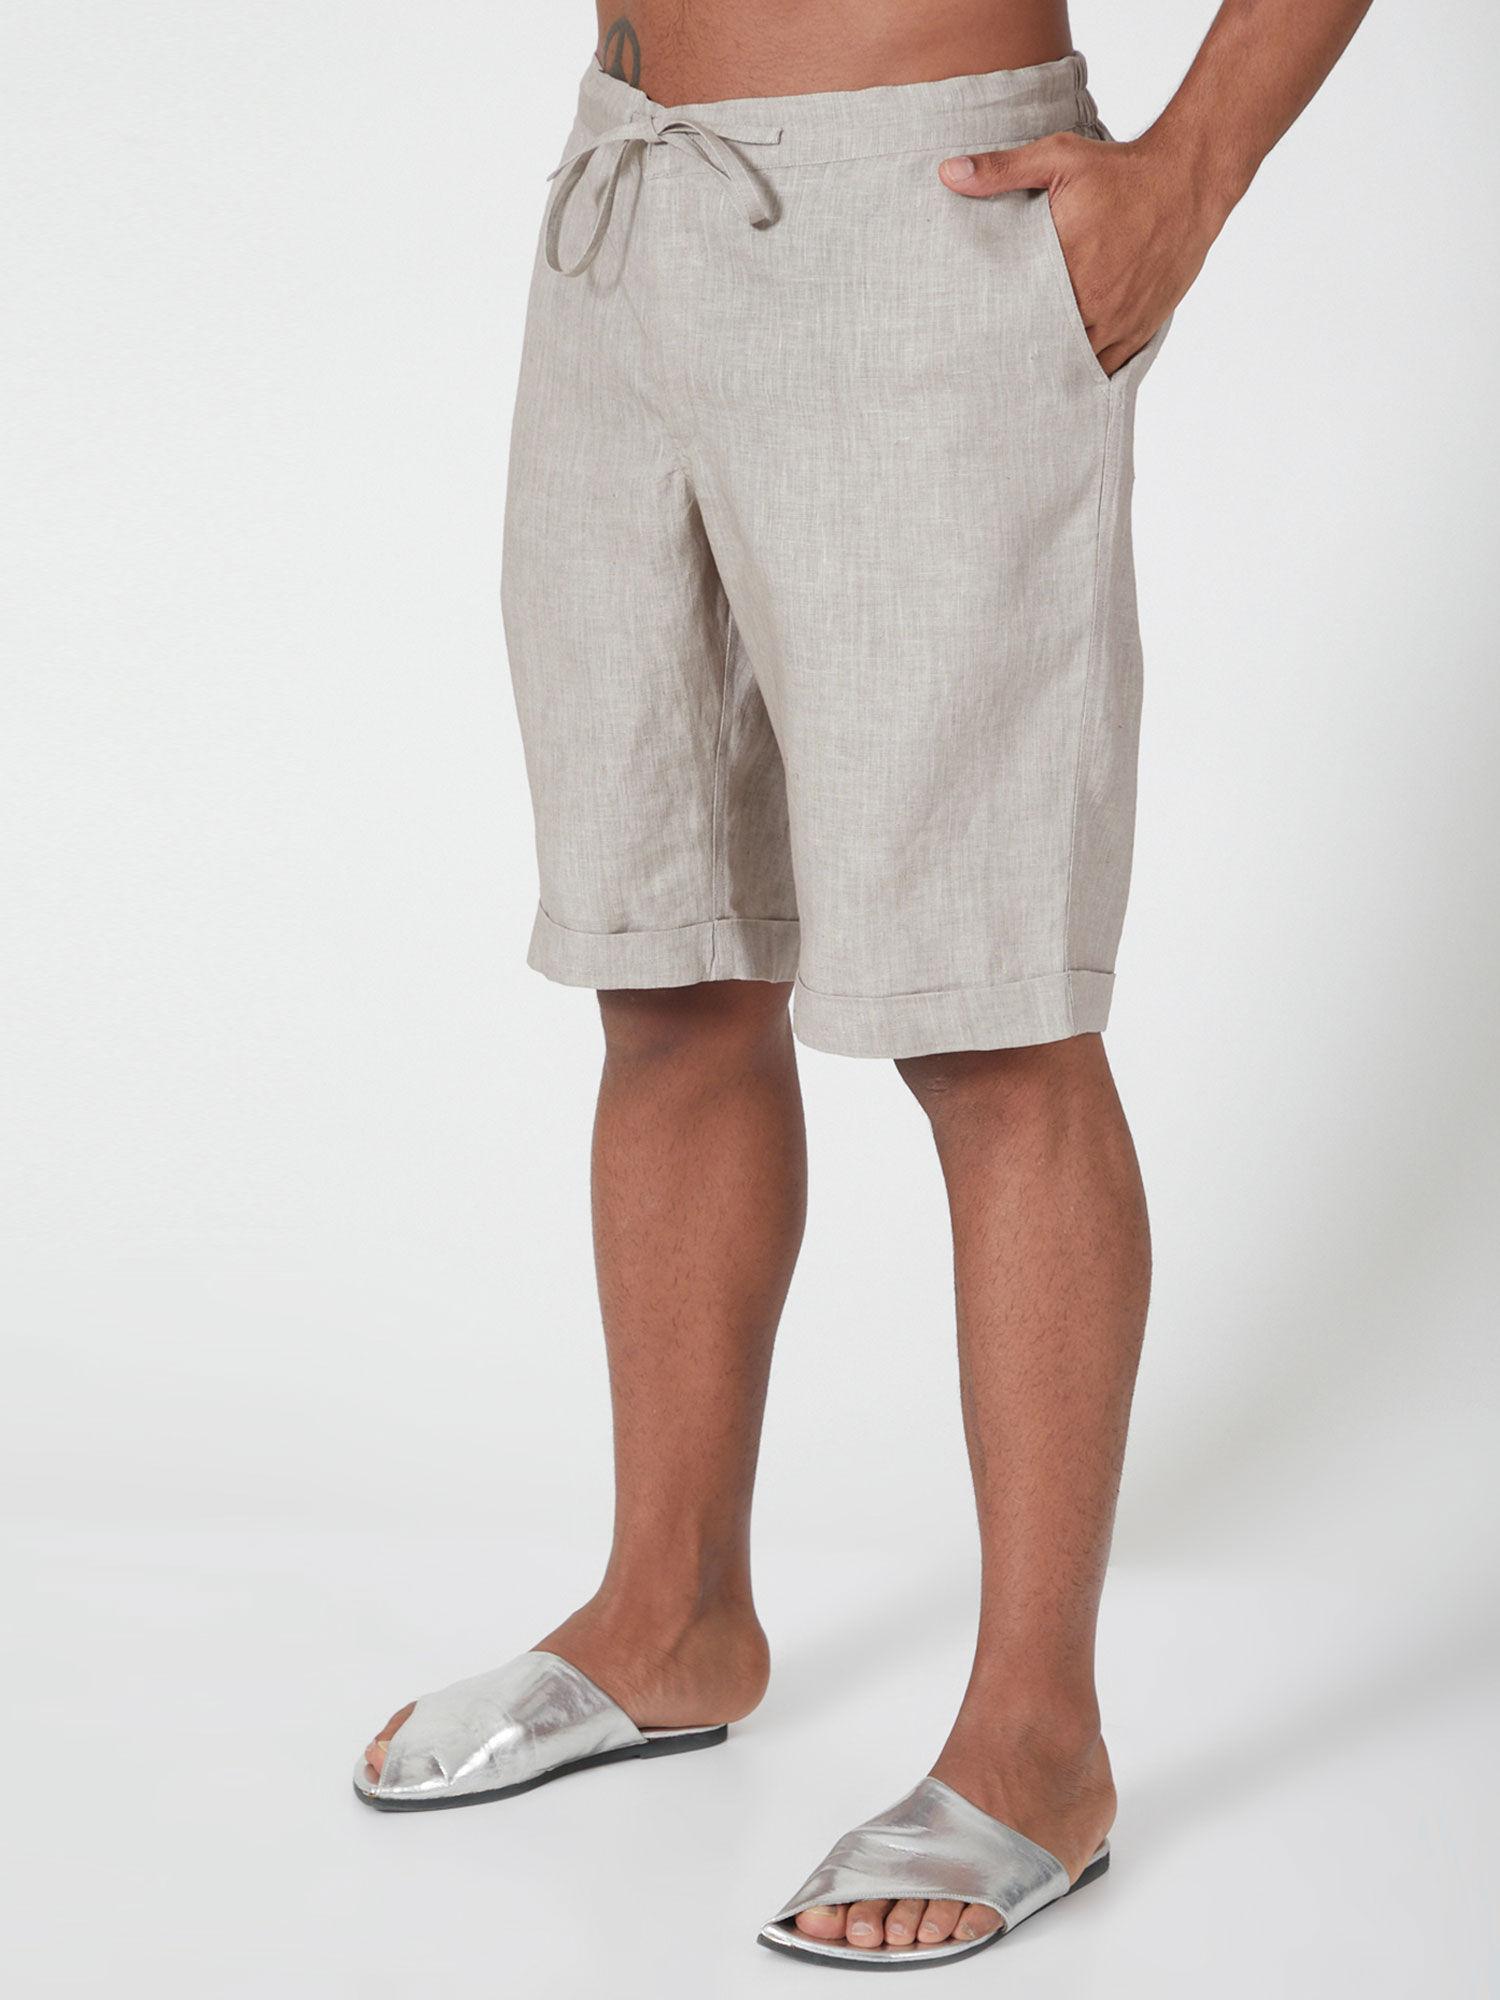 grey linen shorts